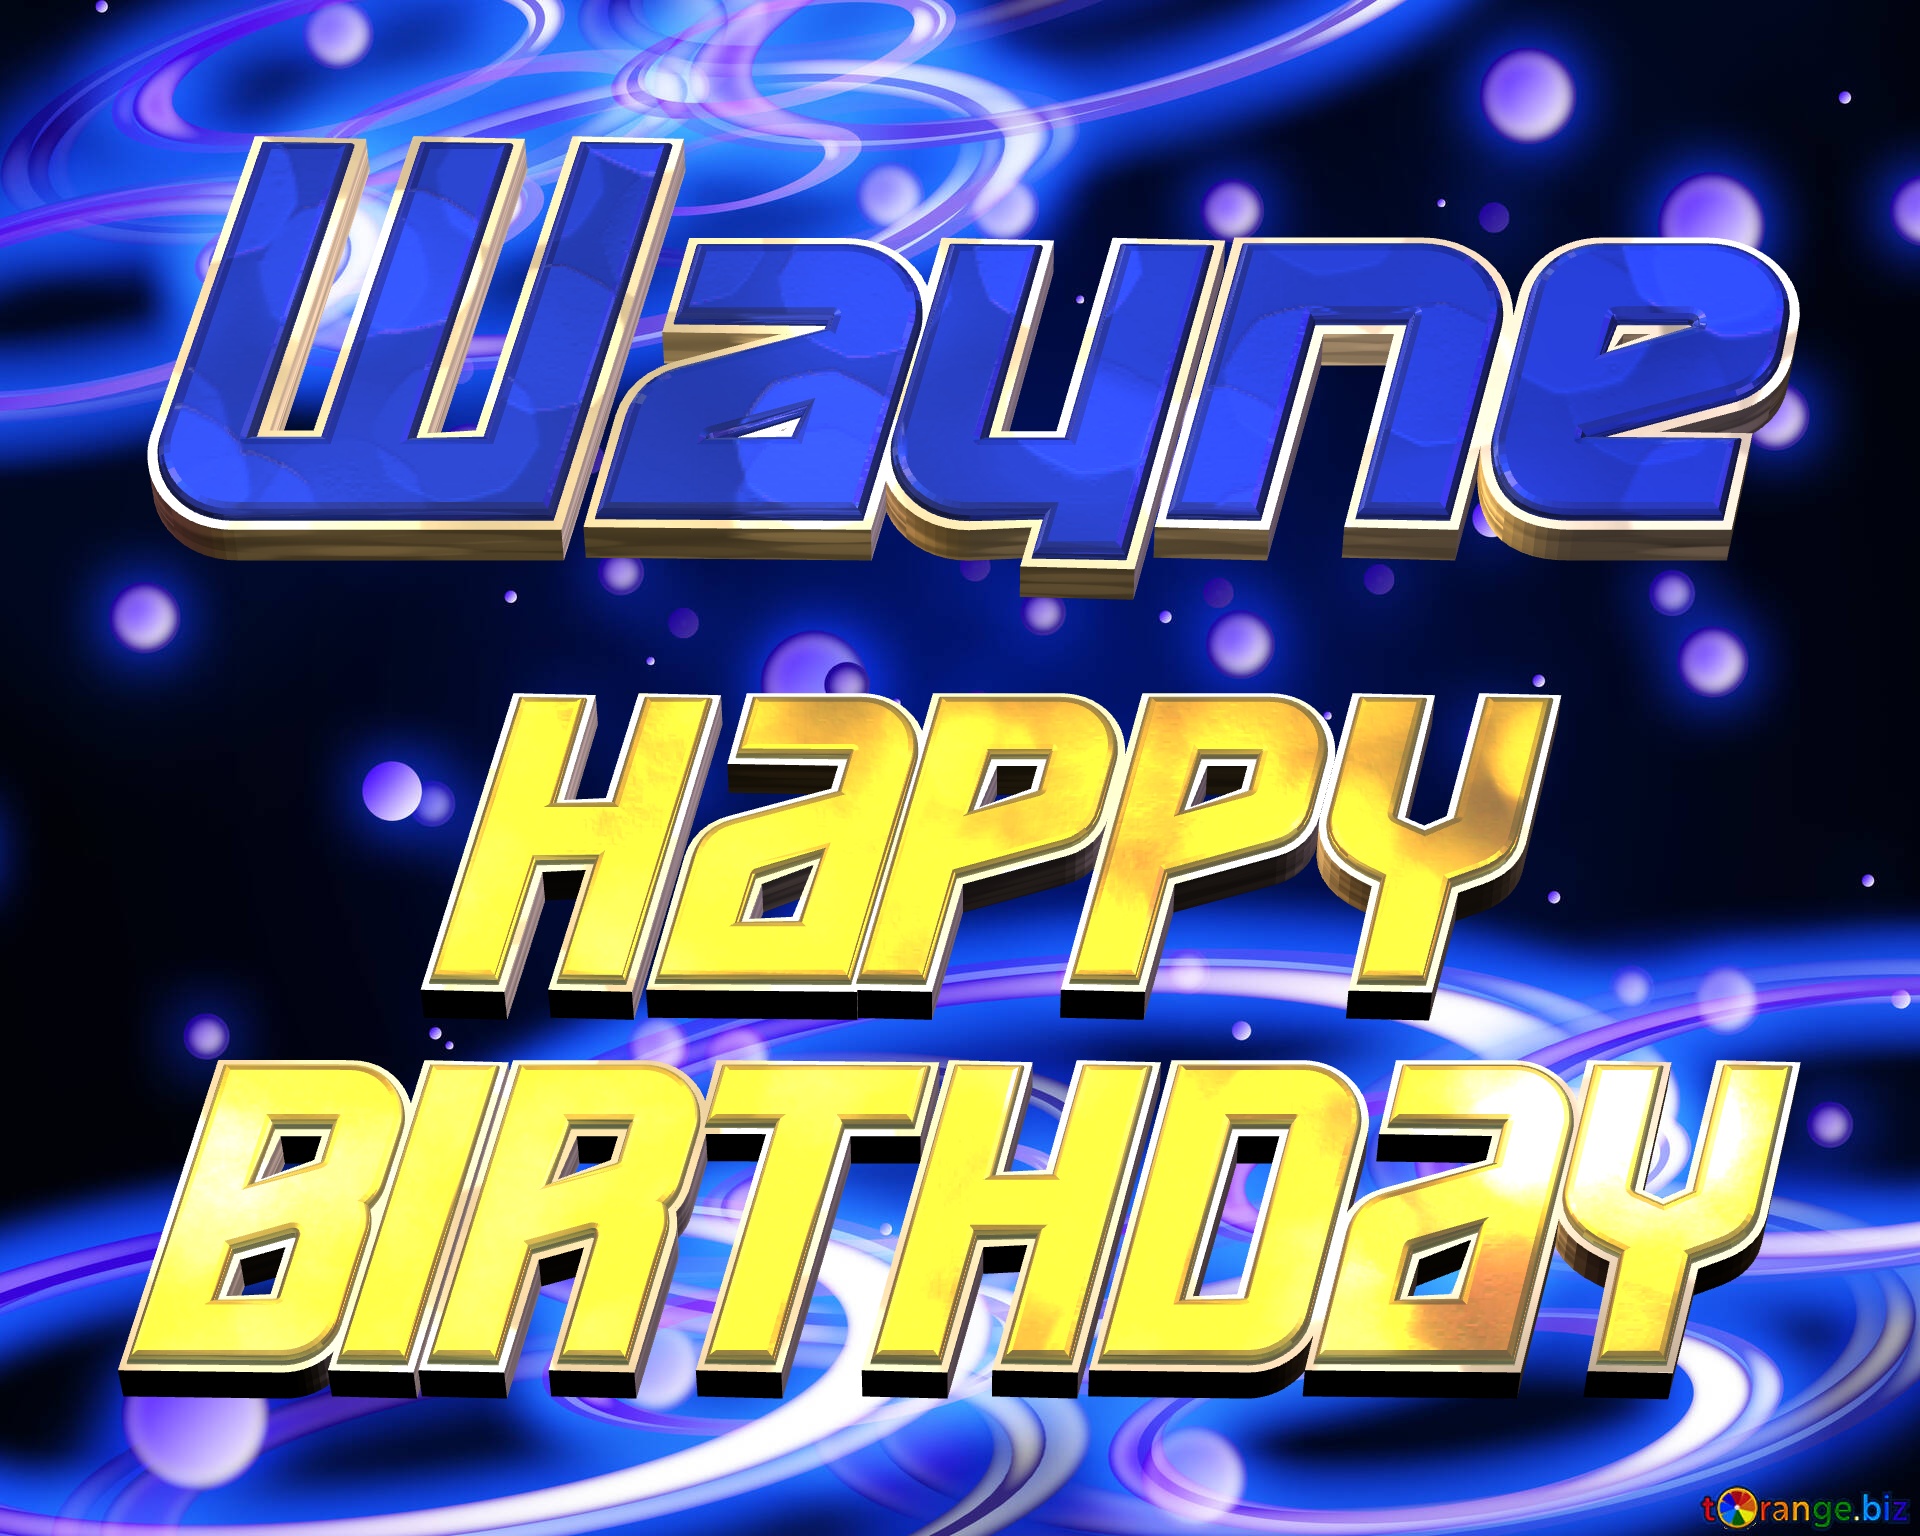 Wayne Space Happy Birthday! Technology background №54919